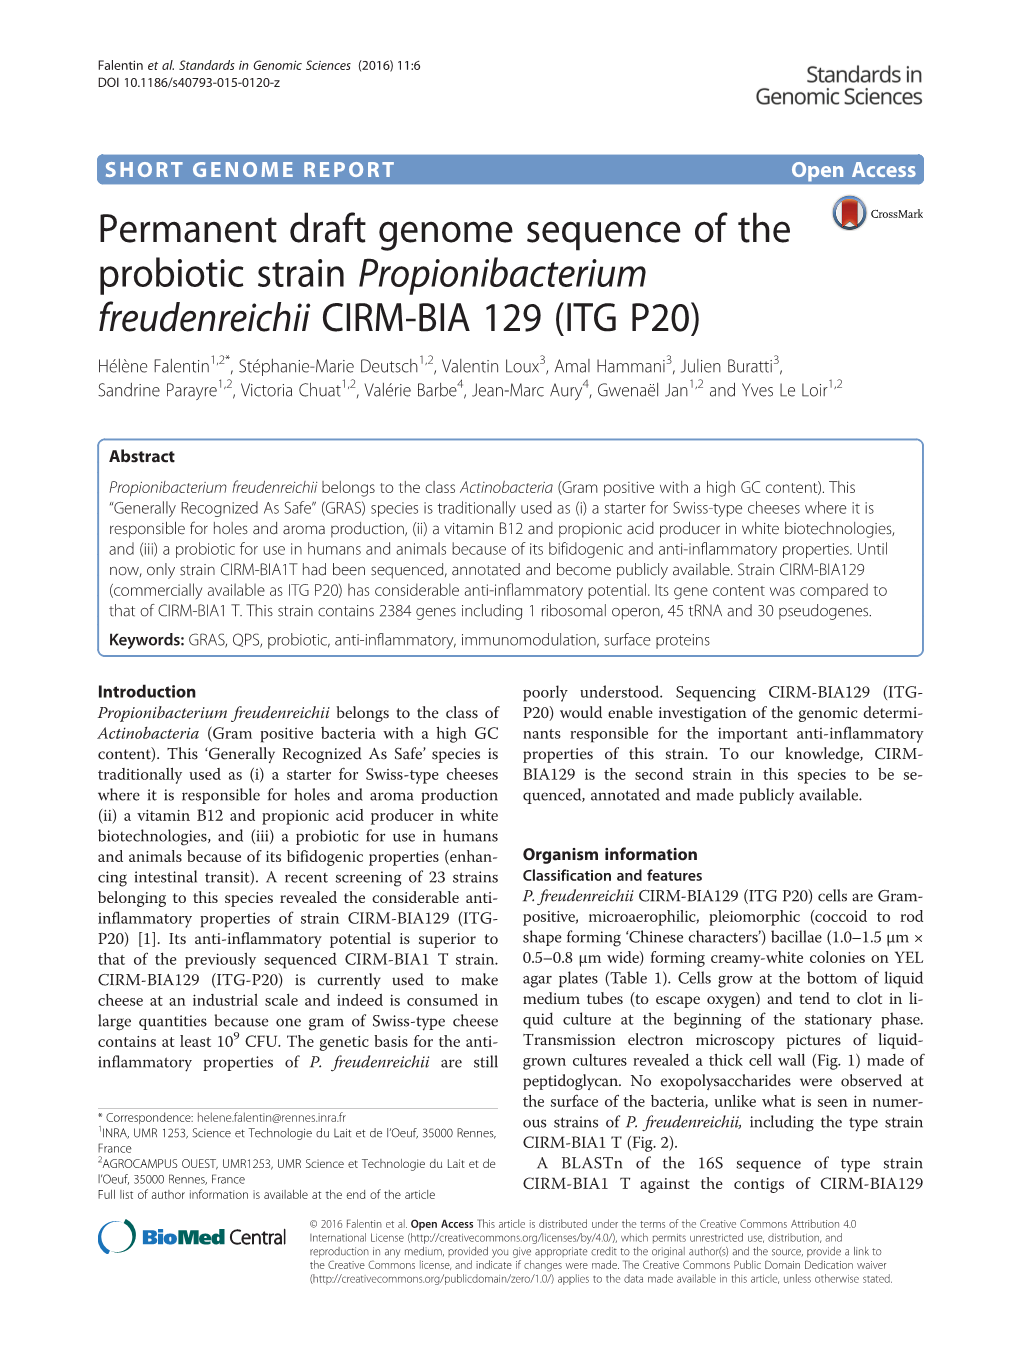 Permanent Draft Genome Sequence of the Probiotic Strain Propionibacterium Freudenreichii CIRM-BIA 129 (ITG P20)